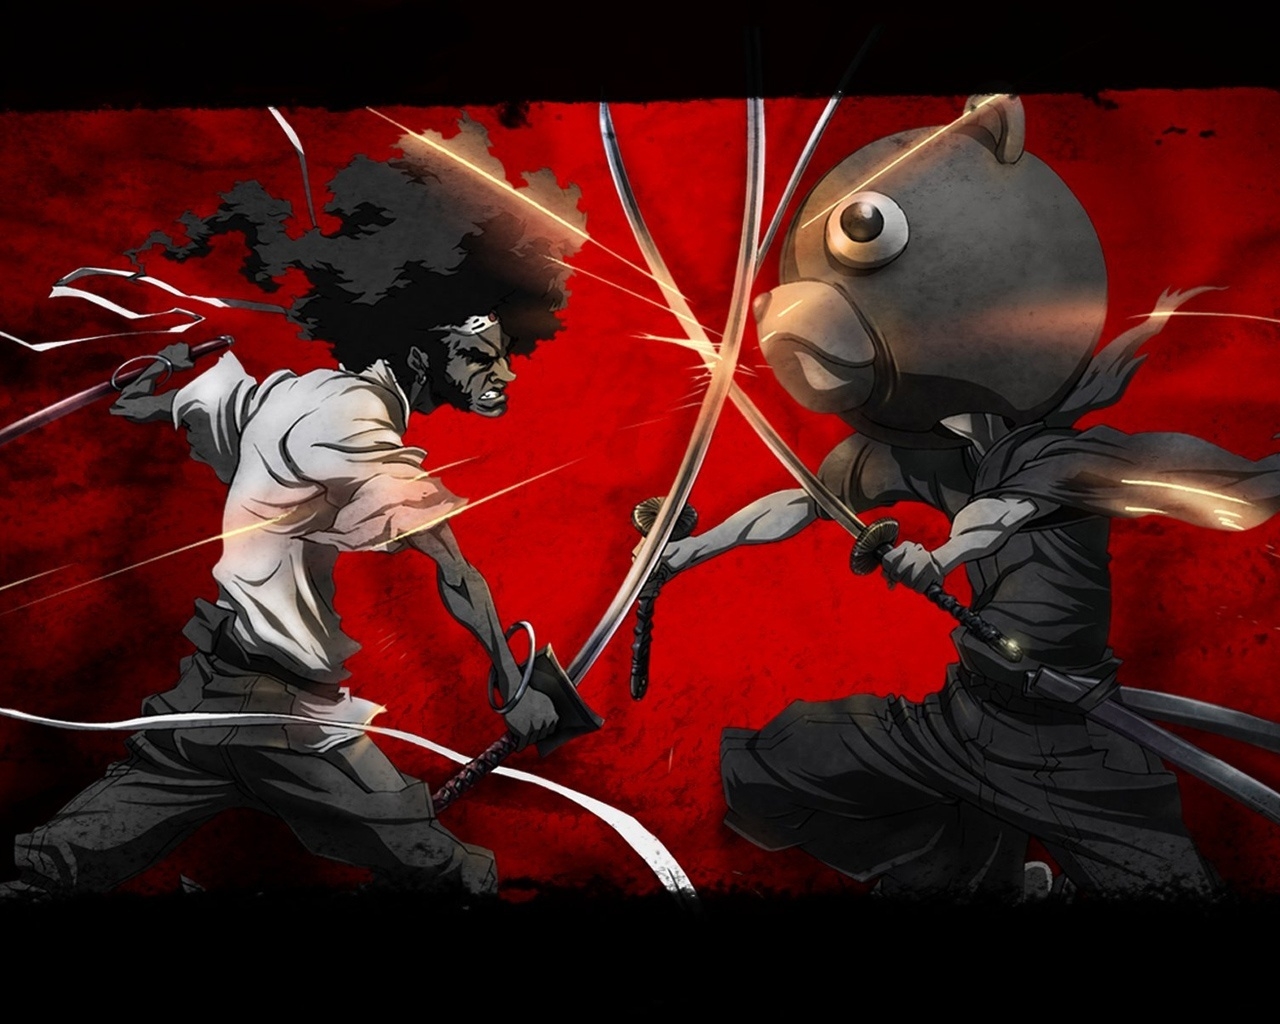 Afro Samurai vs Kuma for 1280 x 1024 resolution